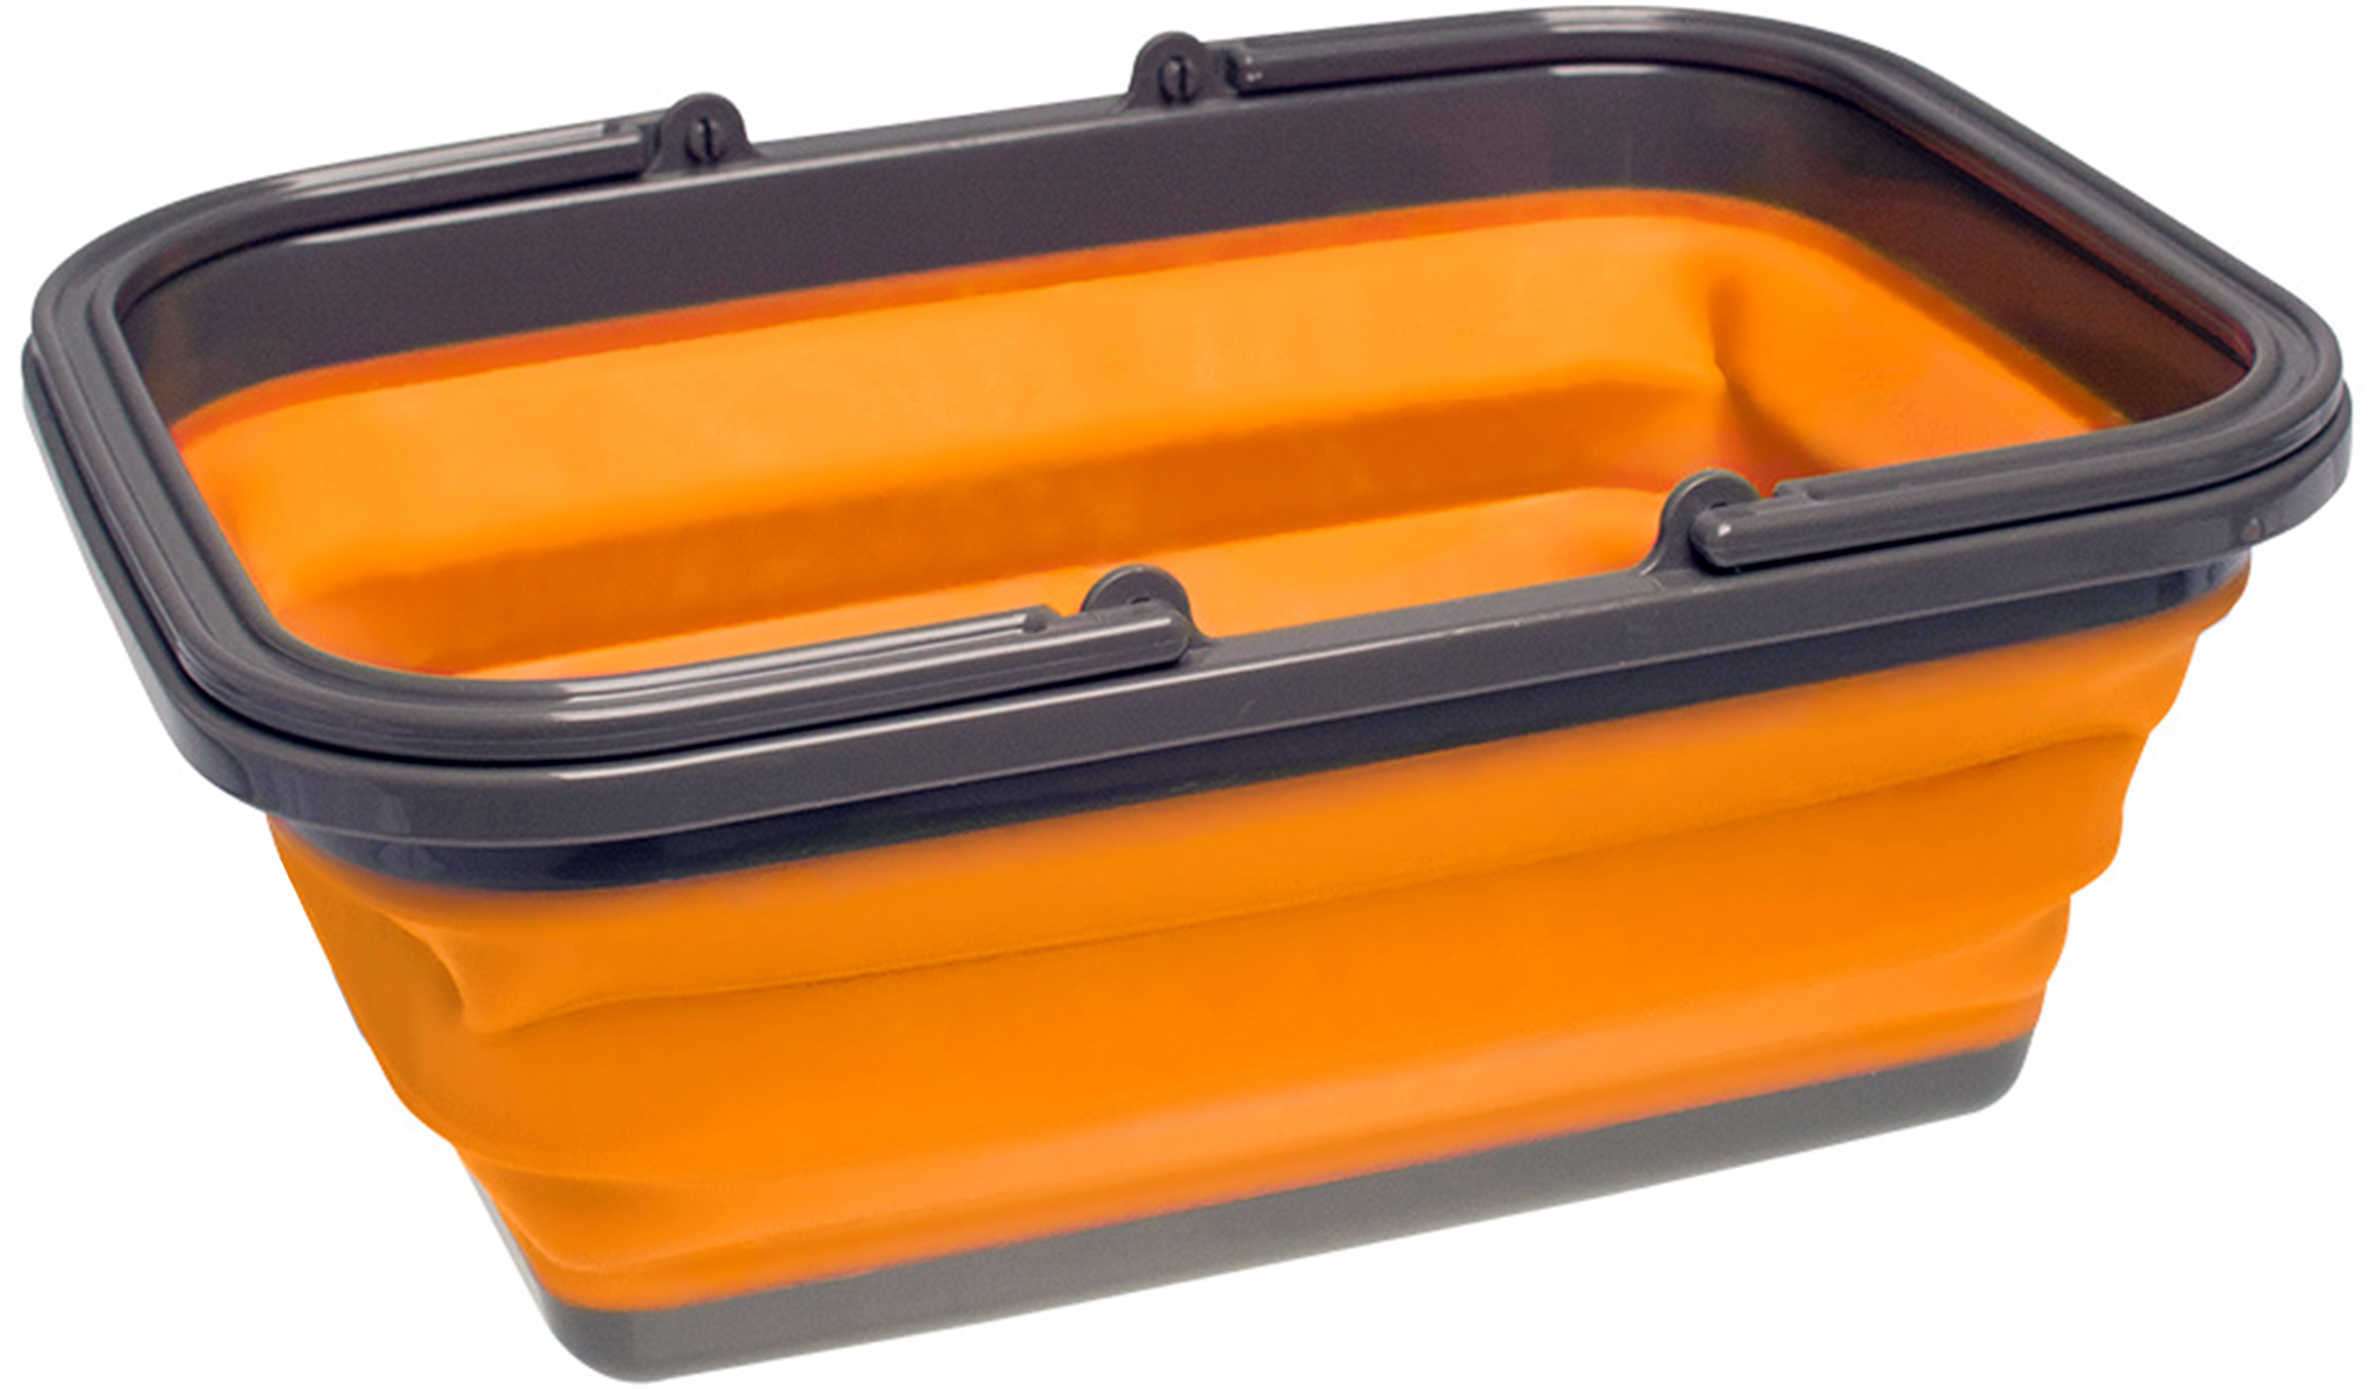 UST FLEXWARE Sink Orange 2.25 Gallon Capacity 15"X11.4"X5.9"